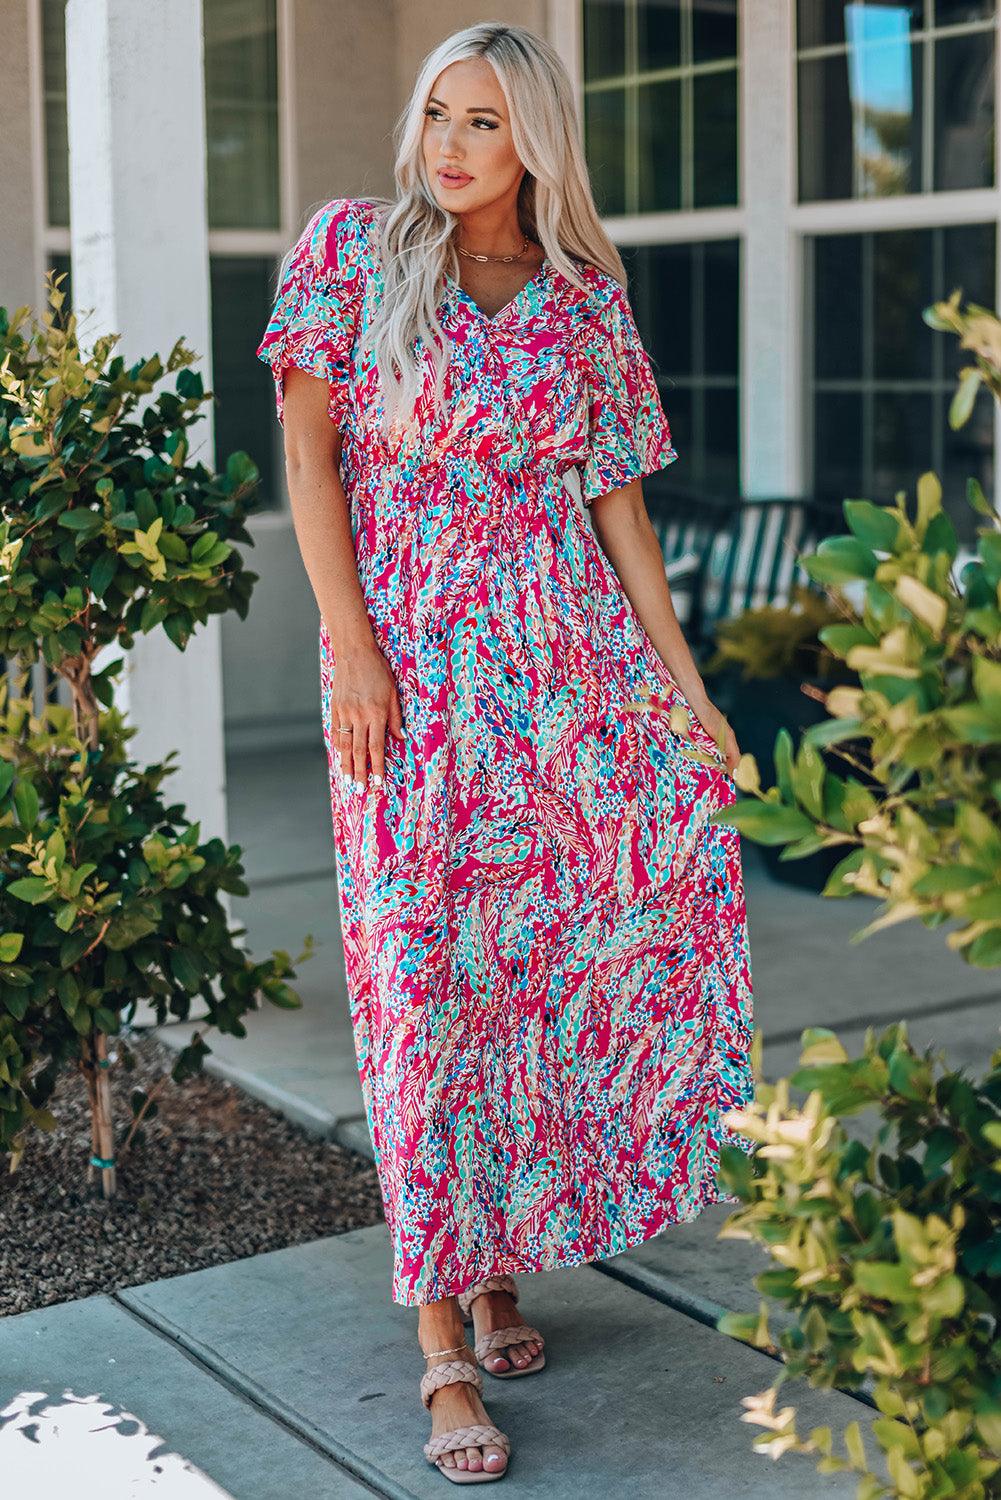 V Neck Floral Sundress Style Maxi Dress for Women